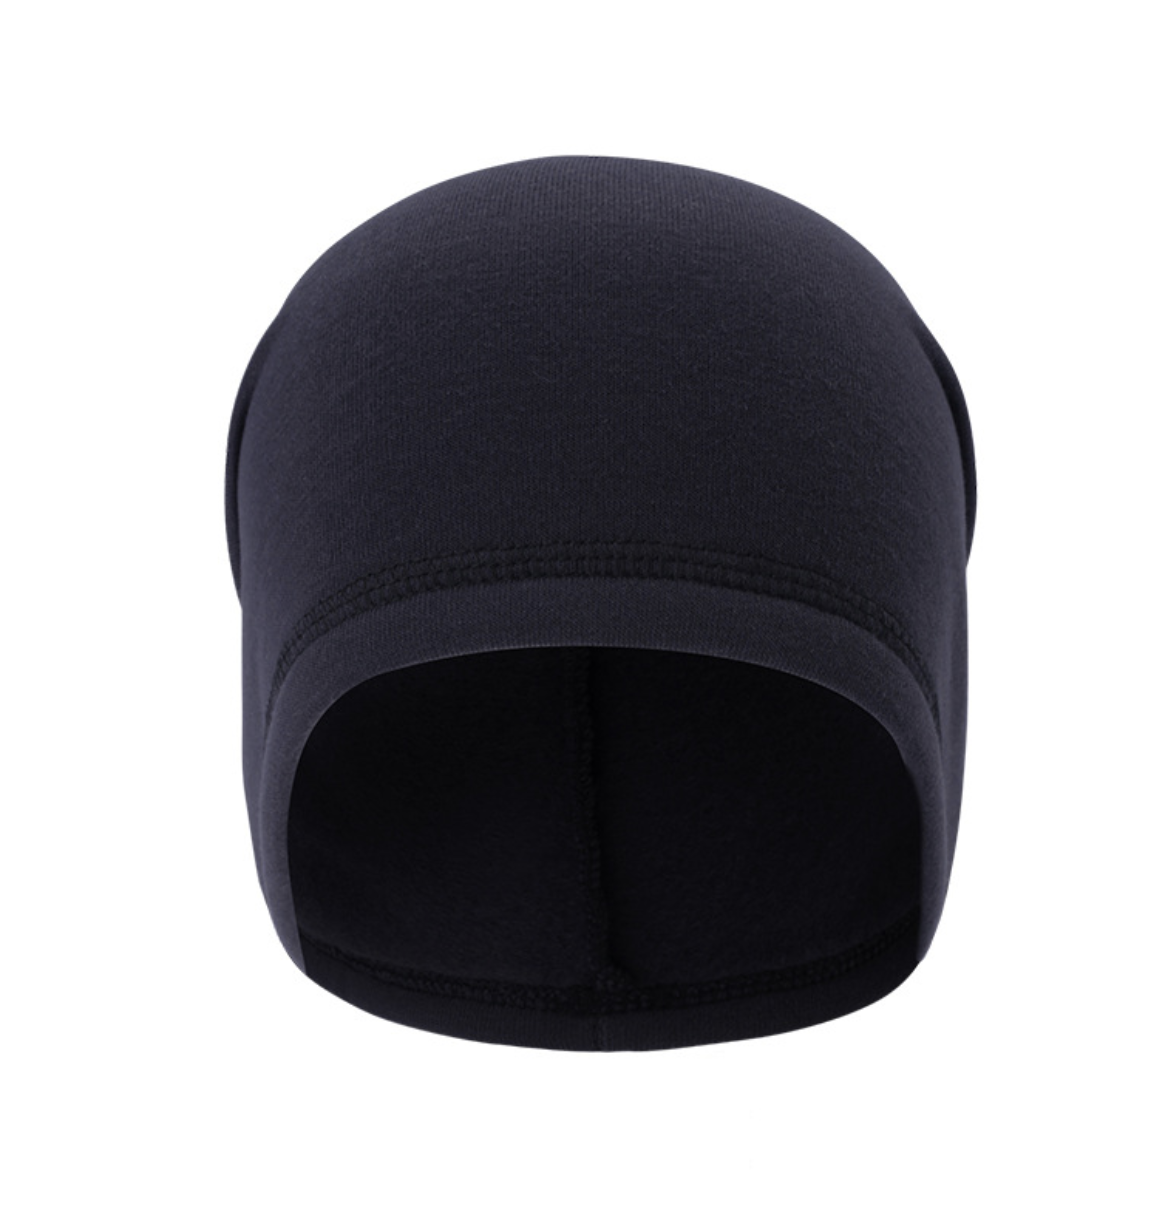 Black Windproof Beanie Hat Cap Slouch Neo Thermal Winter Warm Ski Fleece Lined